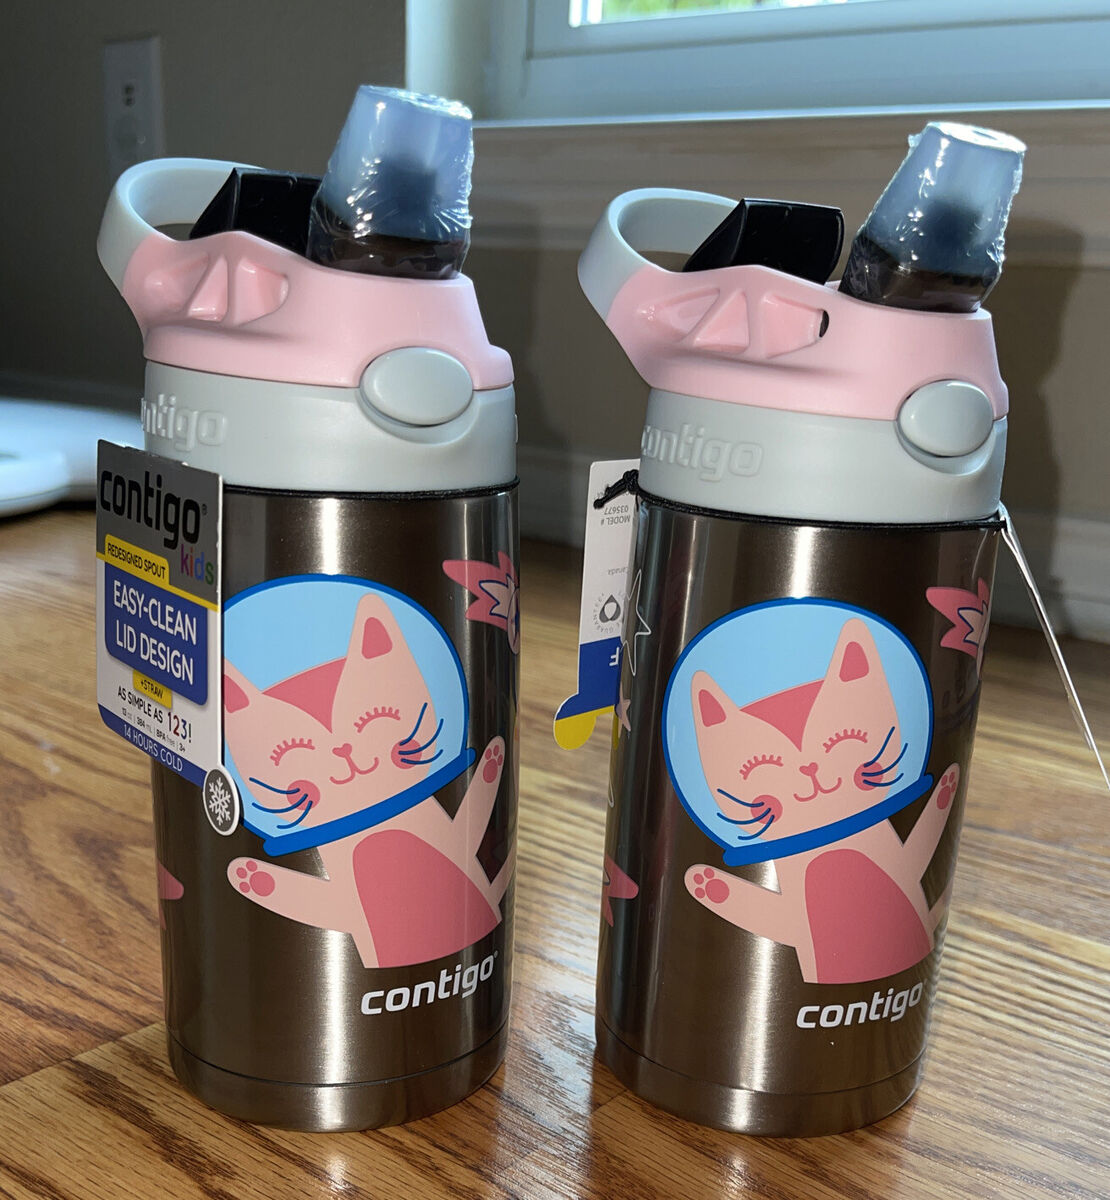 Contigo Kids Water Bottle with Redesigned AUTOSPOUT Straw, 14oz